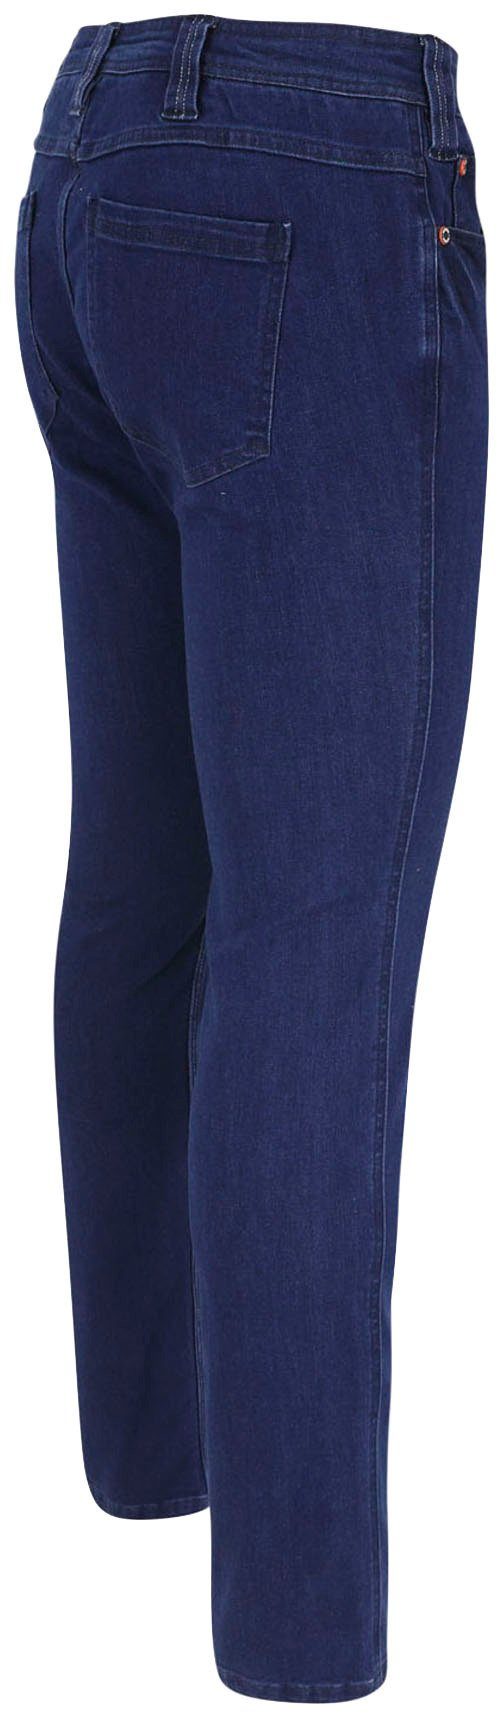 Herock Röhrenhose Seitentaschen Slimfit, 2 Lingo Jeans, Multi-Pocket, Stretch sehr bequem